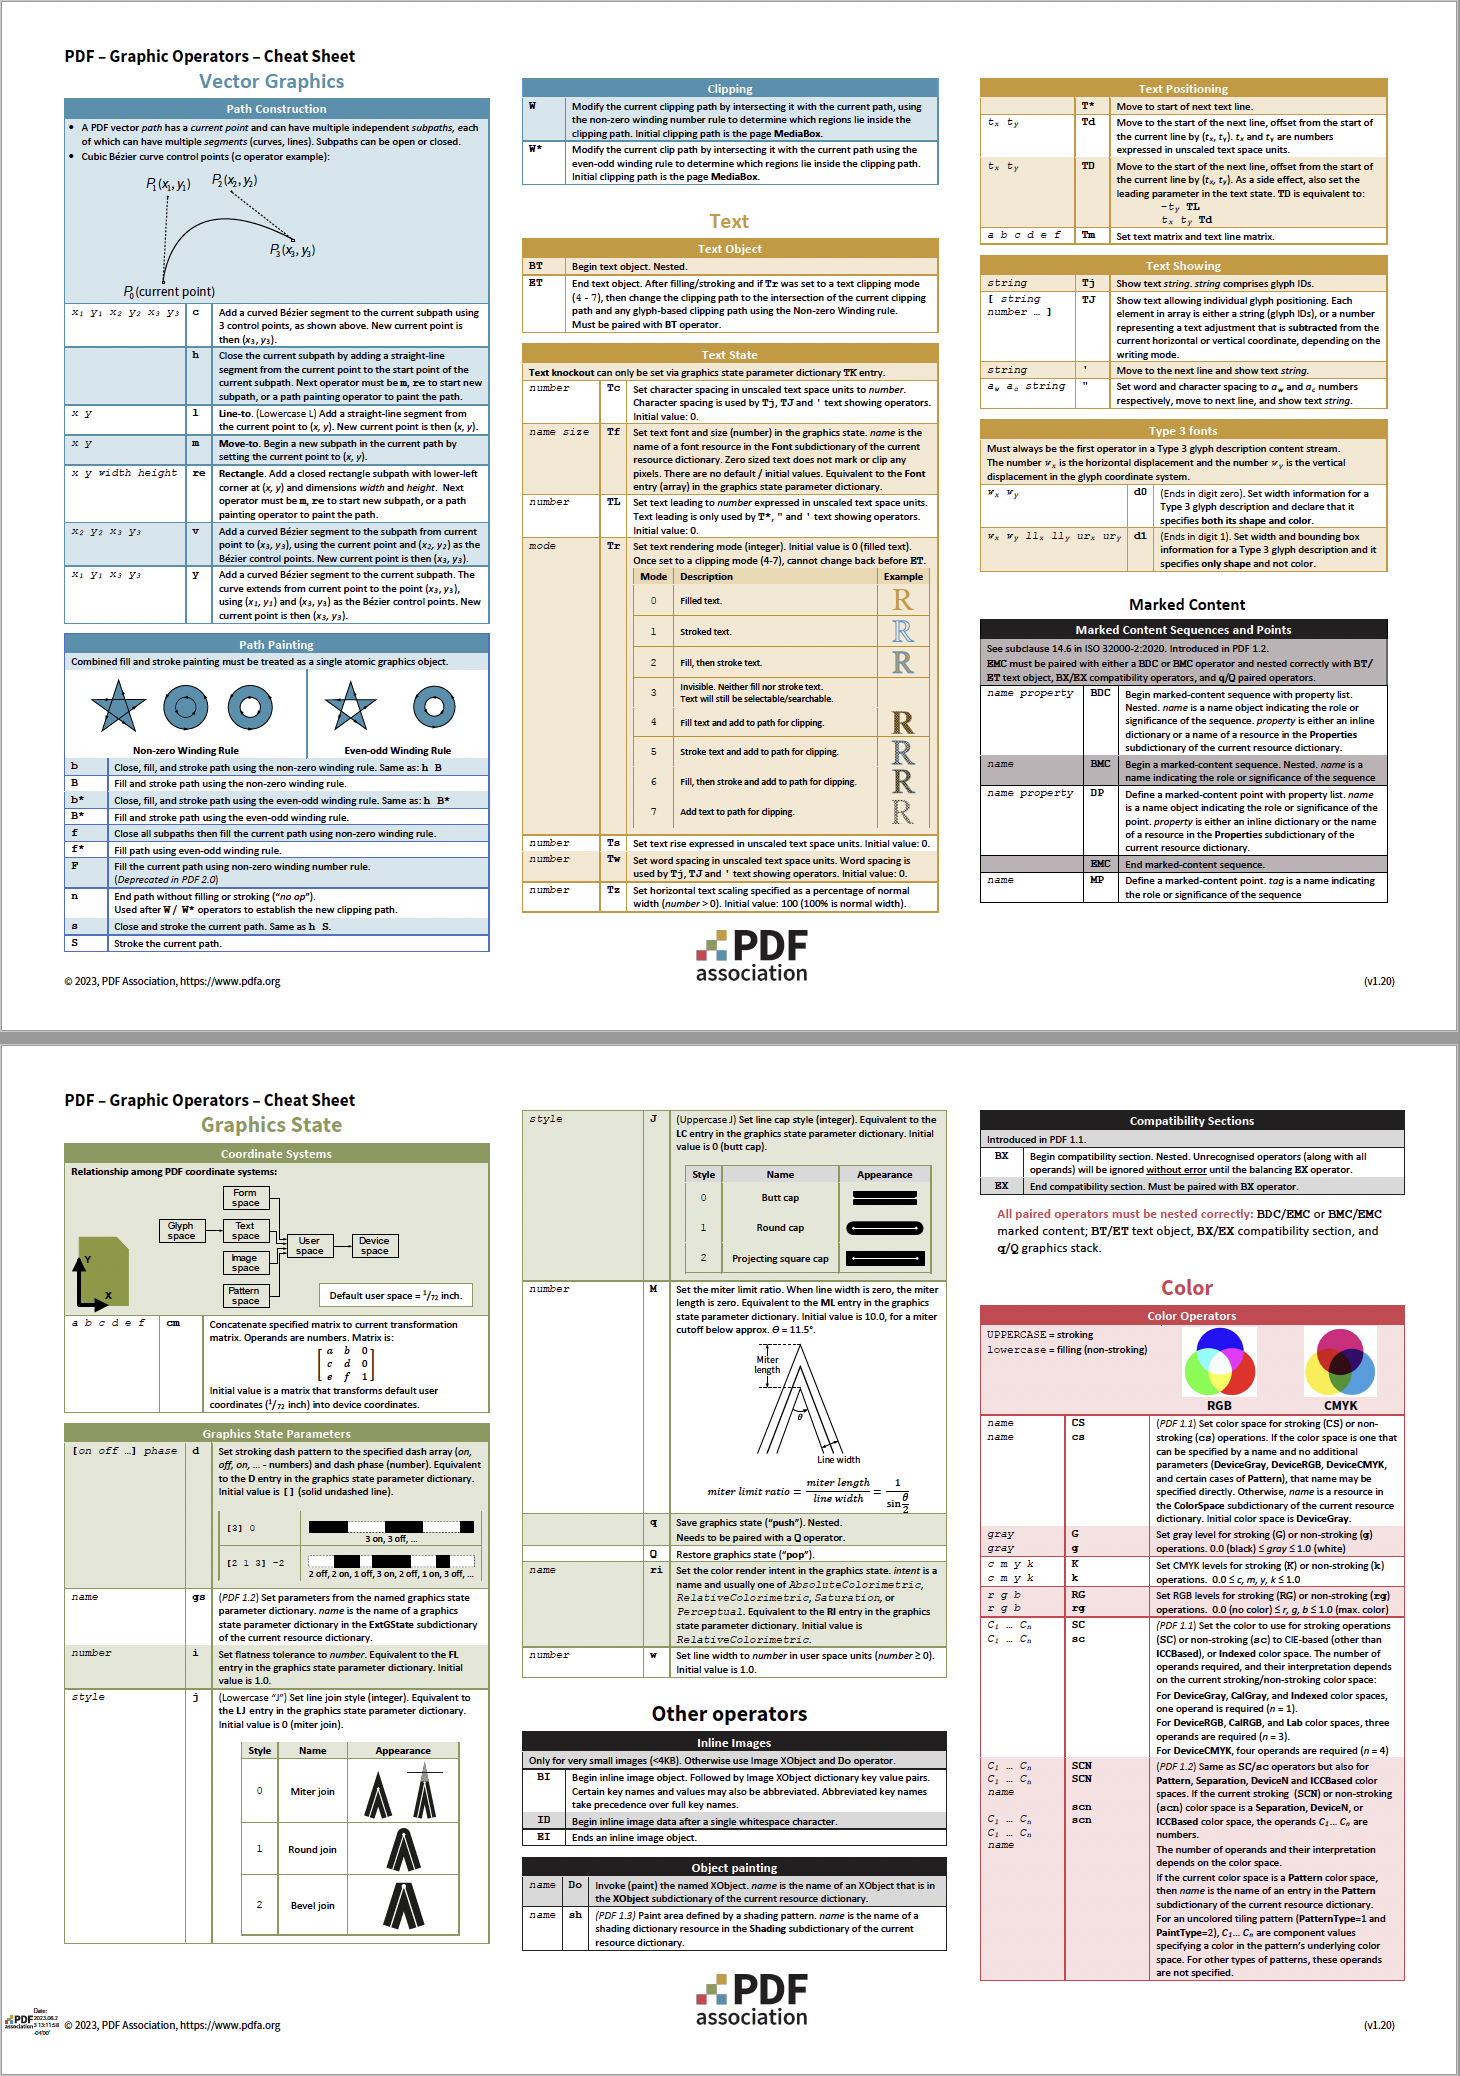 PDF Association, PDF 2.0 / ISO 32000-2 Cheat Sheets, Graphic Operators and Operands<br>
Grafiska operatorer och operander - Bild